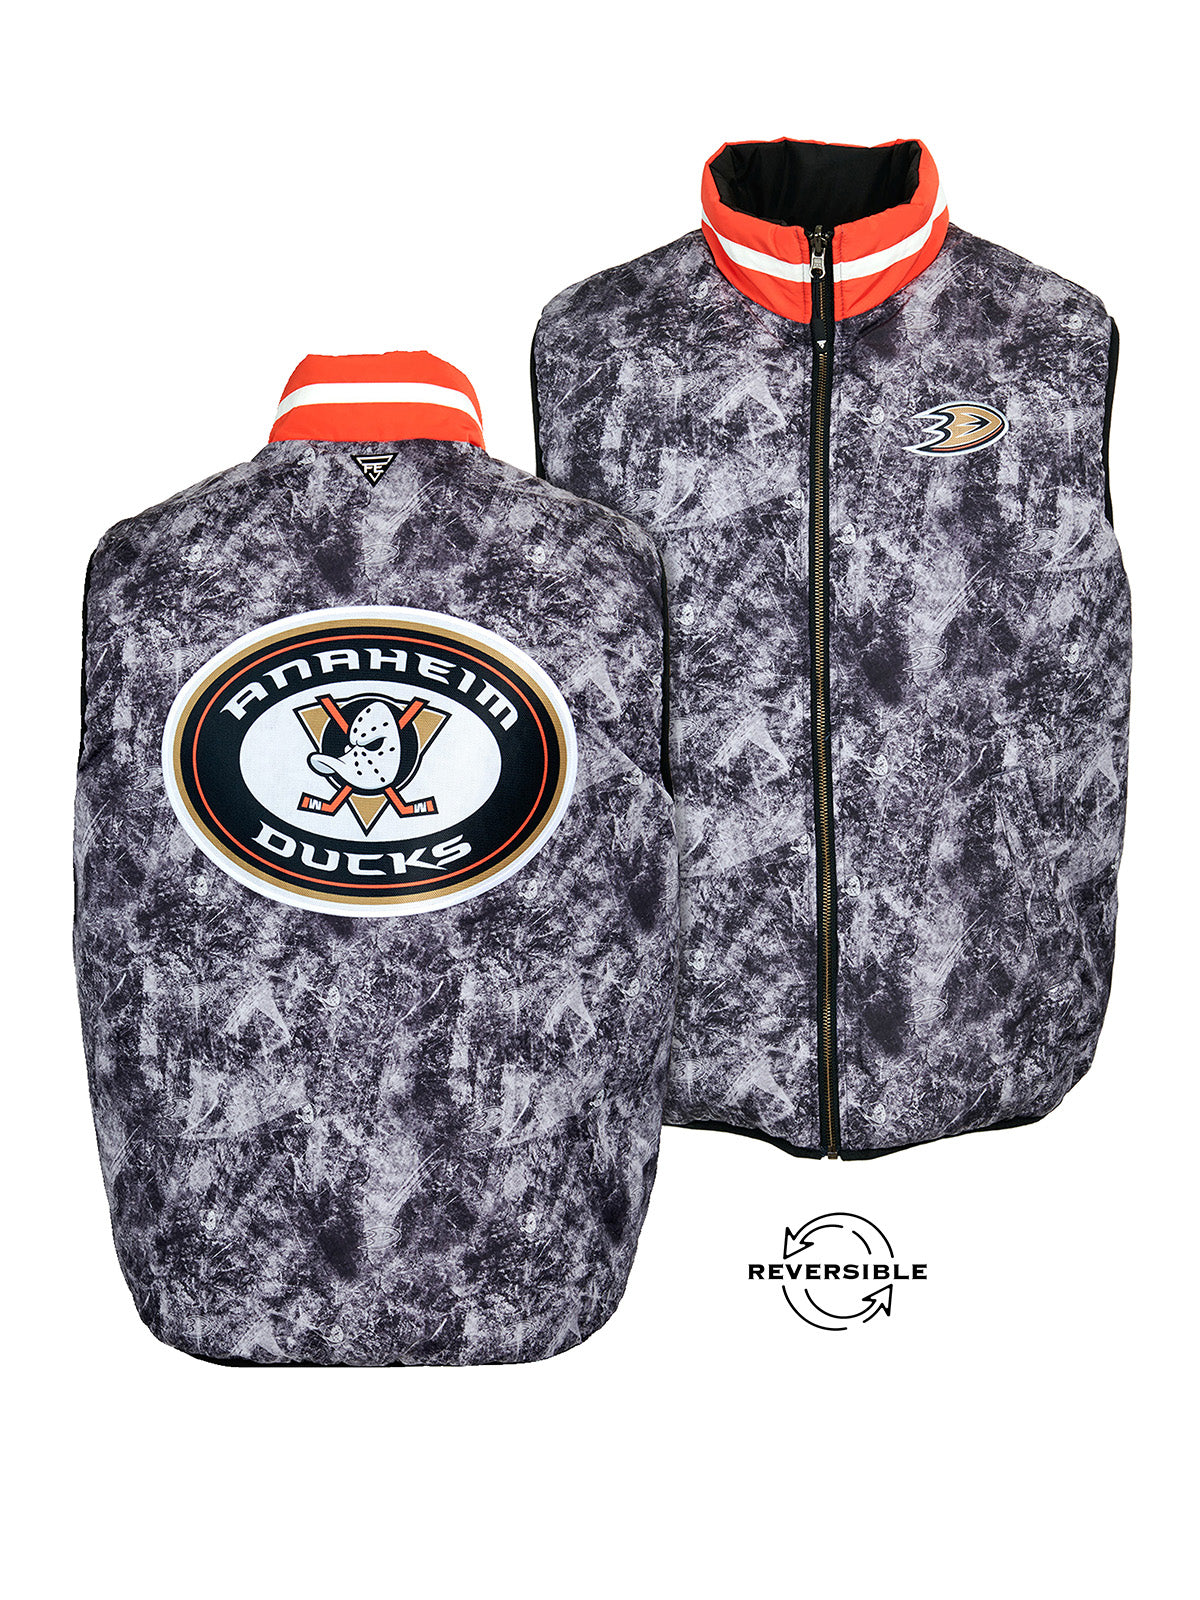 Anaheim Ducks Reversible Vest